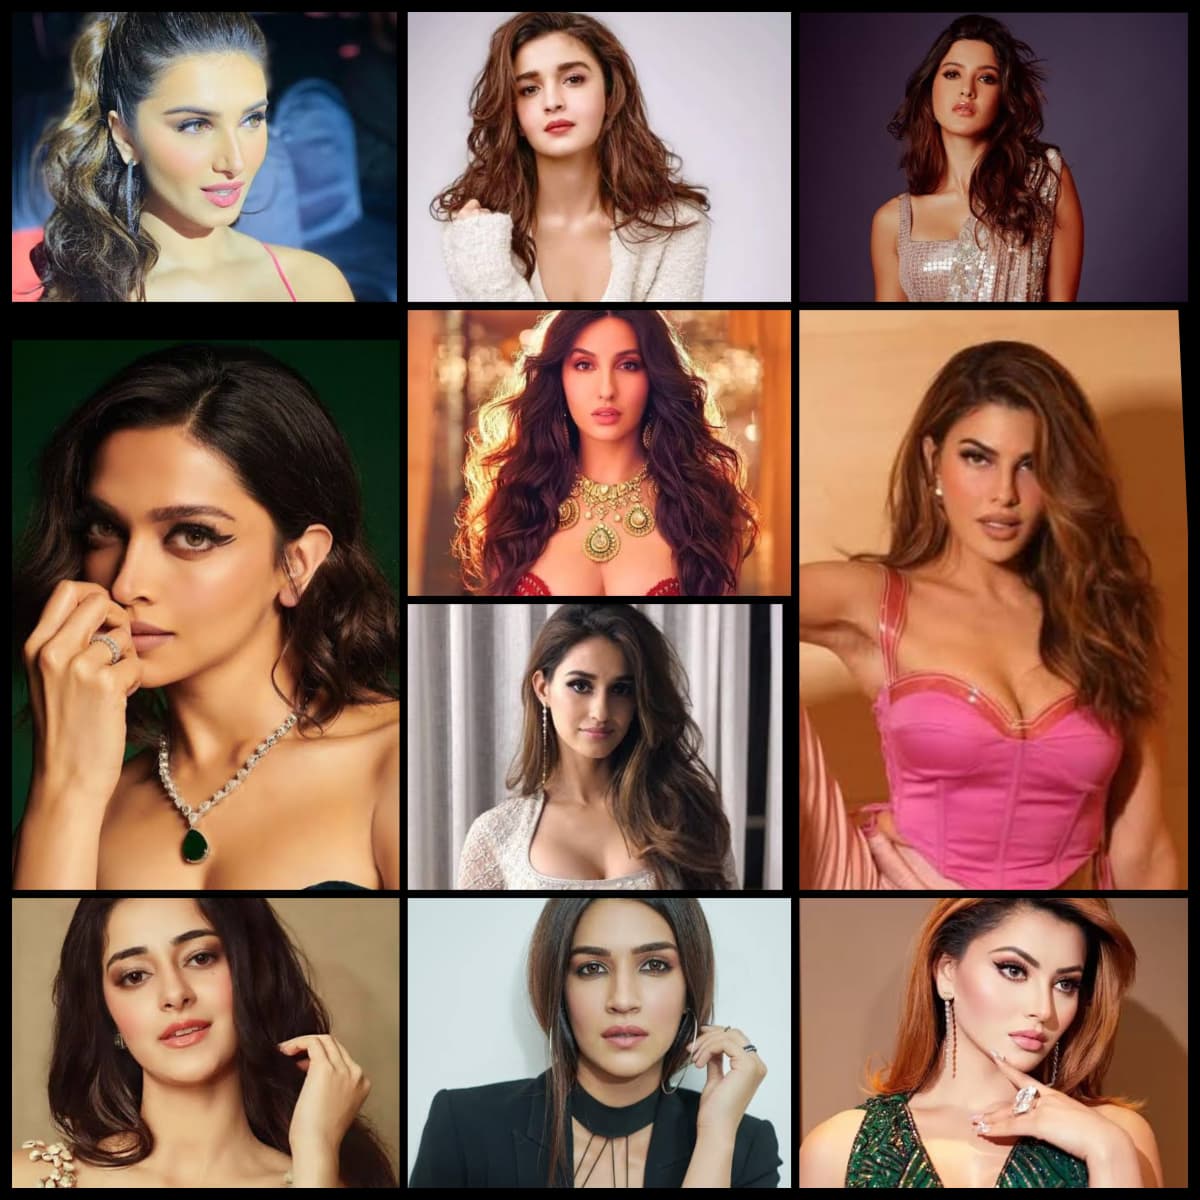 https://images.saymedia-content.com/.image/ar_1:1%2Cc_fill%2Ccs_srgb%2Cfl_progressive%2Cq_auto:eco%2Cw_1200/MTk0MDYyMDg4MDc1MDI3OTcz/top-10-most-beautiful-young-indian-actresses.jpg